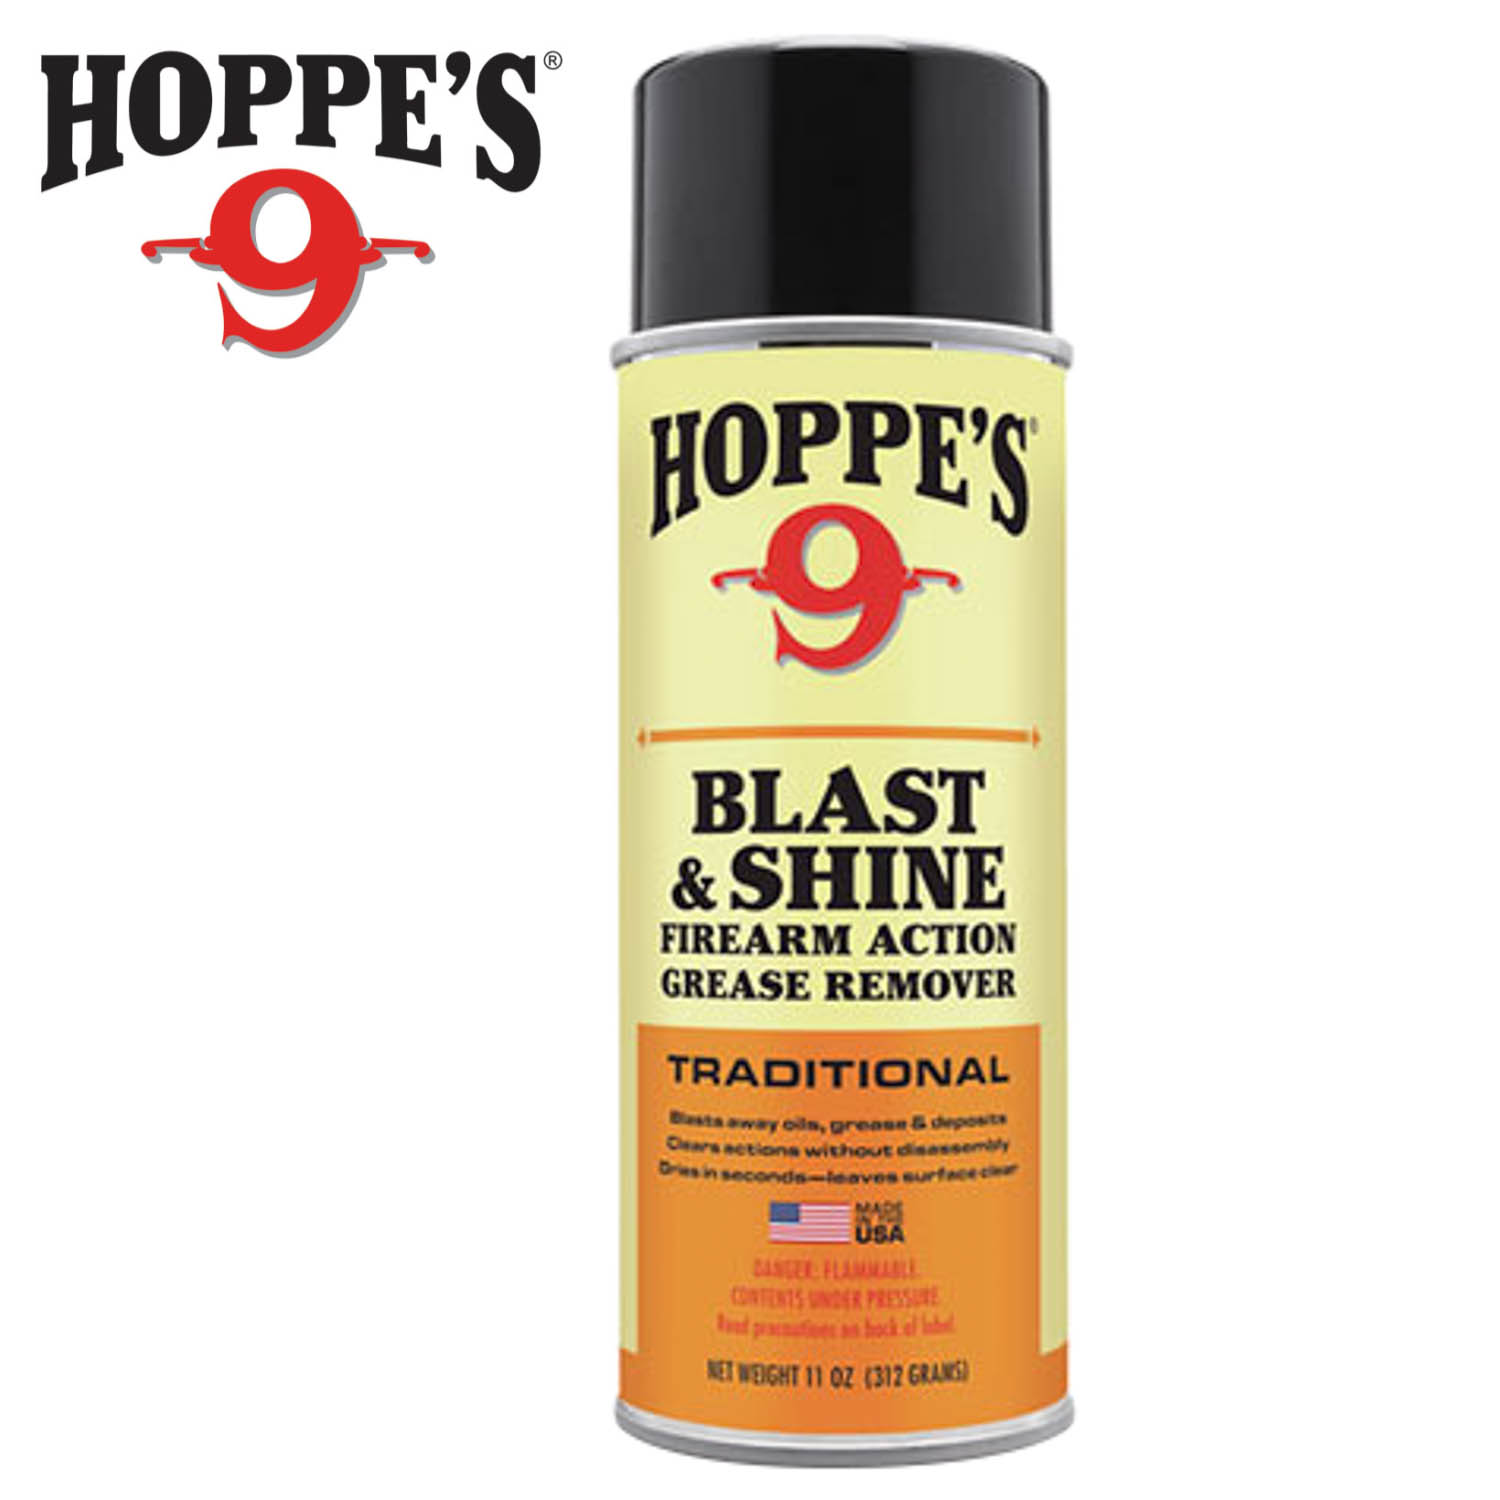 Hoppe's No.9 Blast & Shine Gun Cleaner Degreaser, 11oz.: MGW